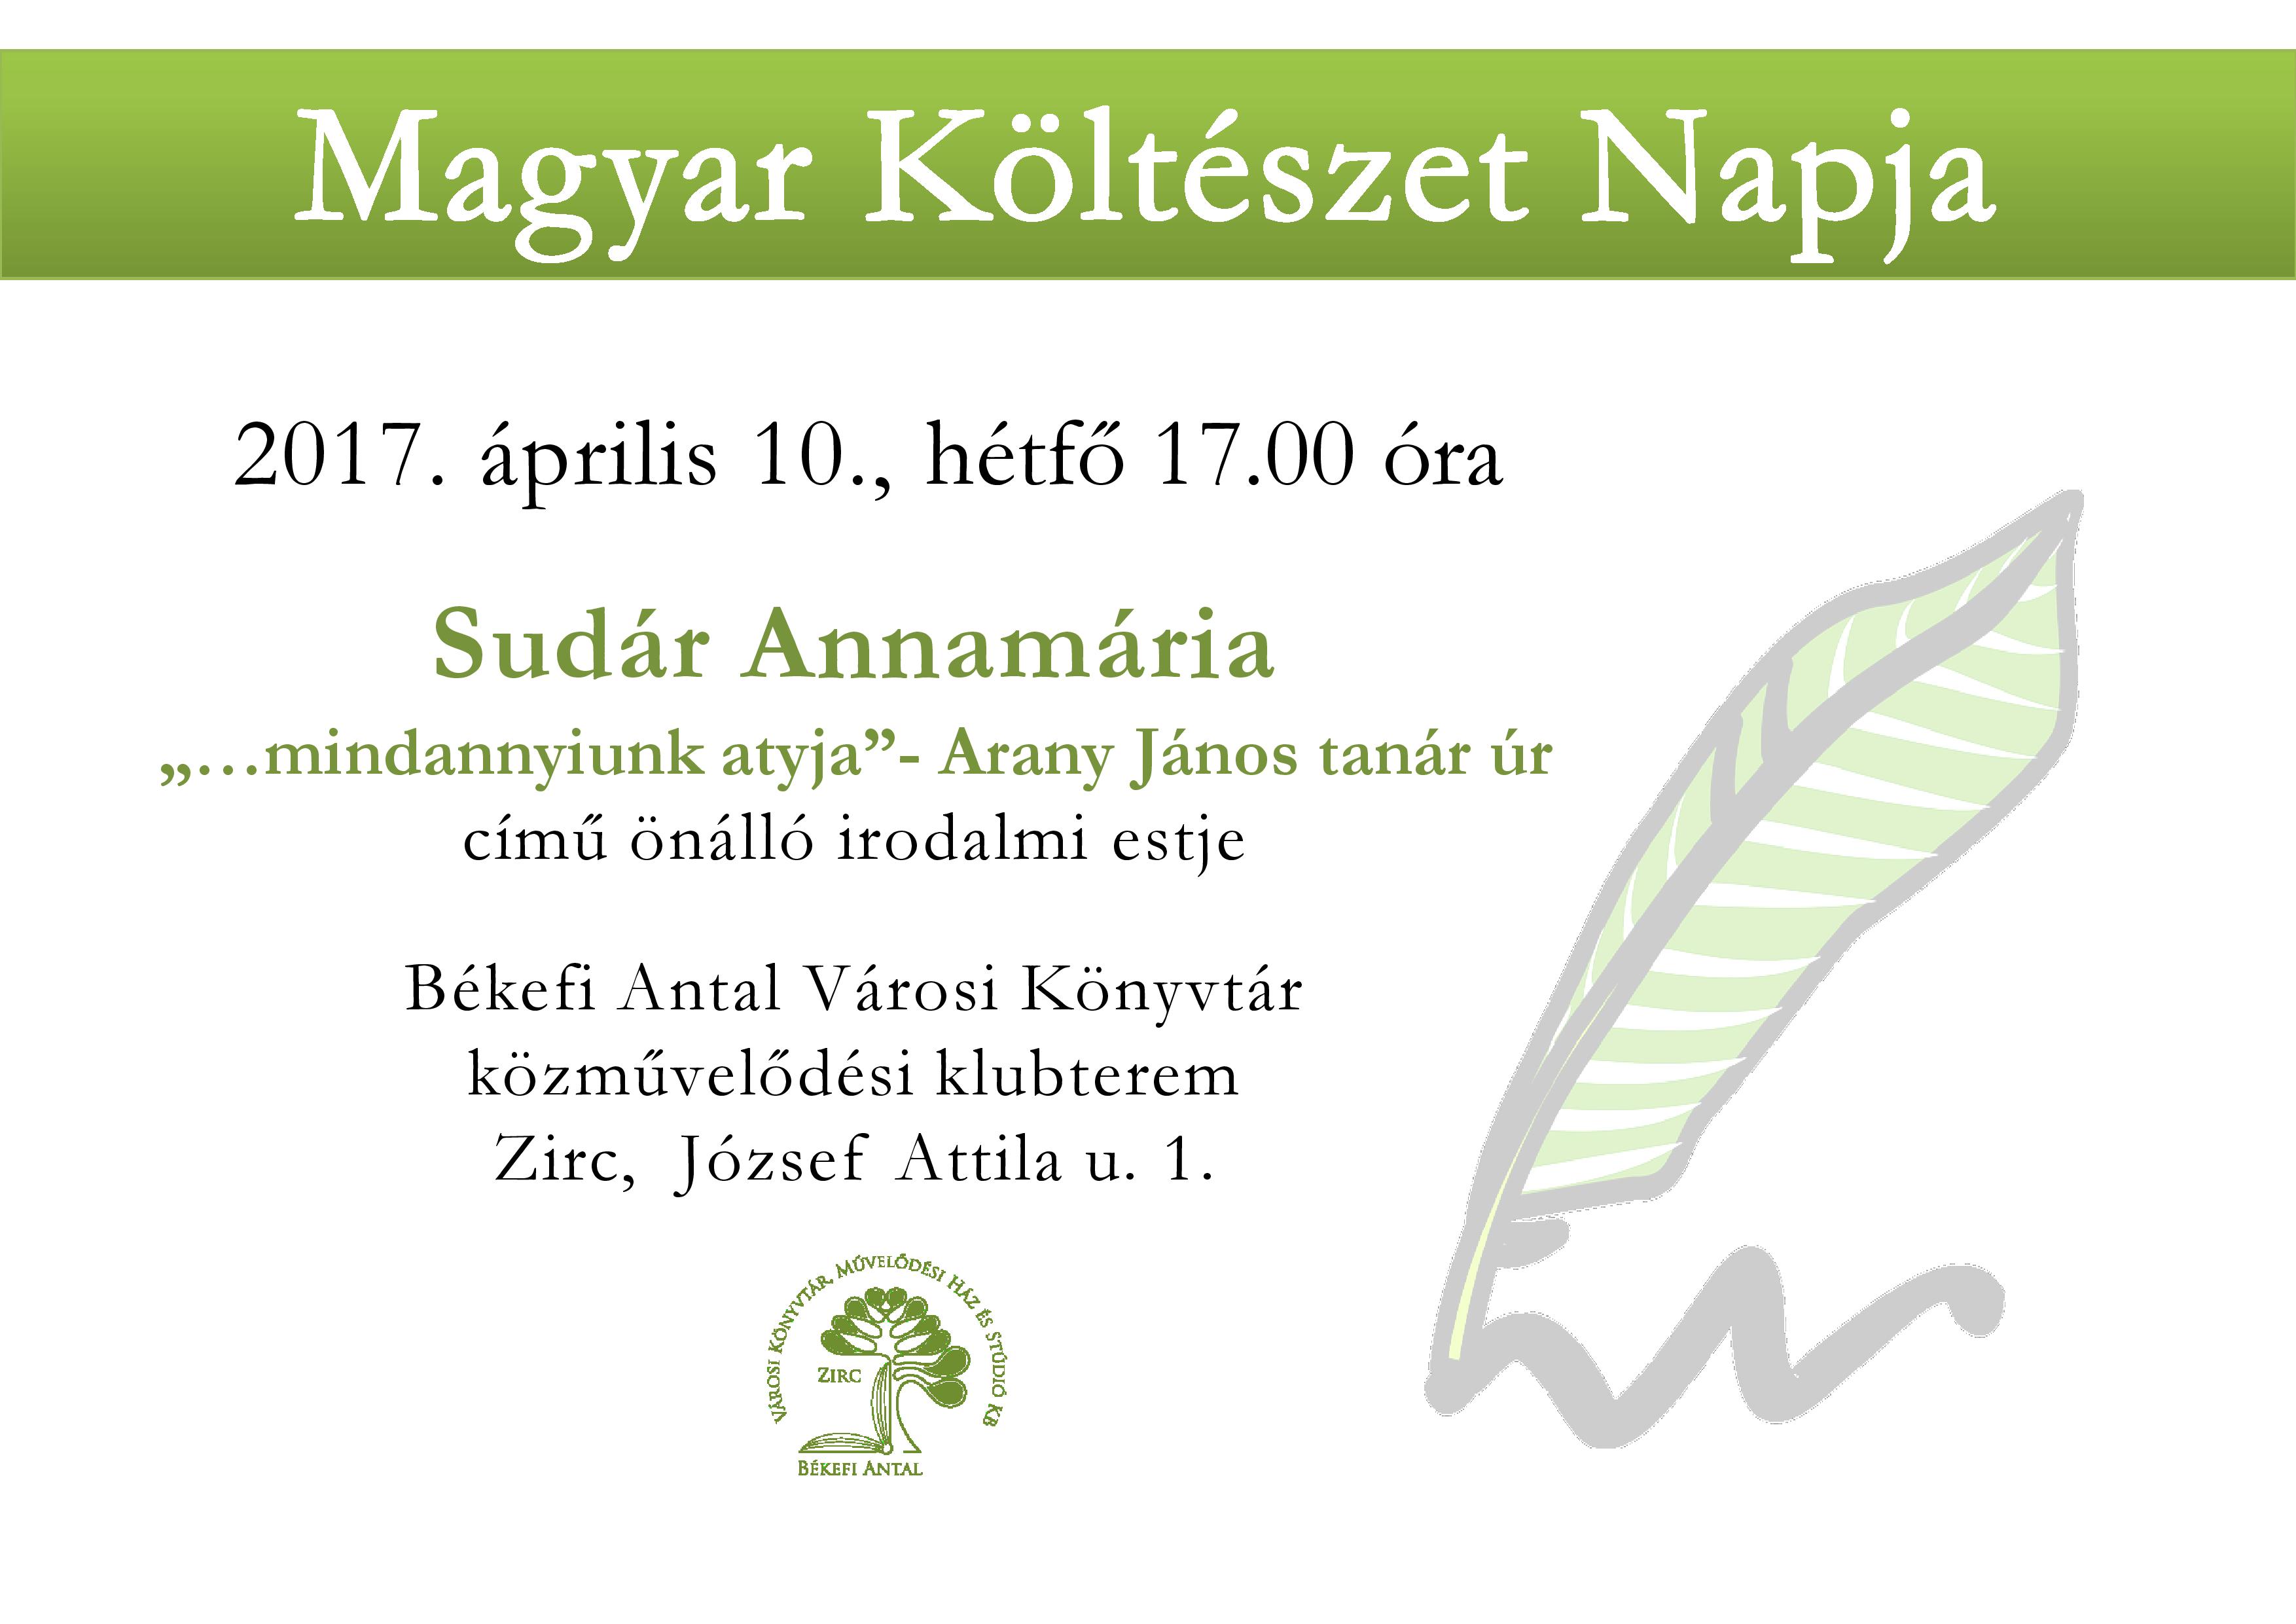 2017-04-10_magyar_kolteszet_napja-sudar_annamaria.jpg